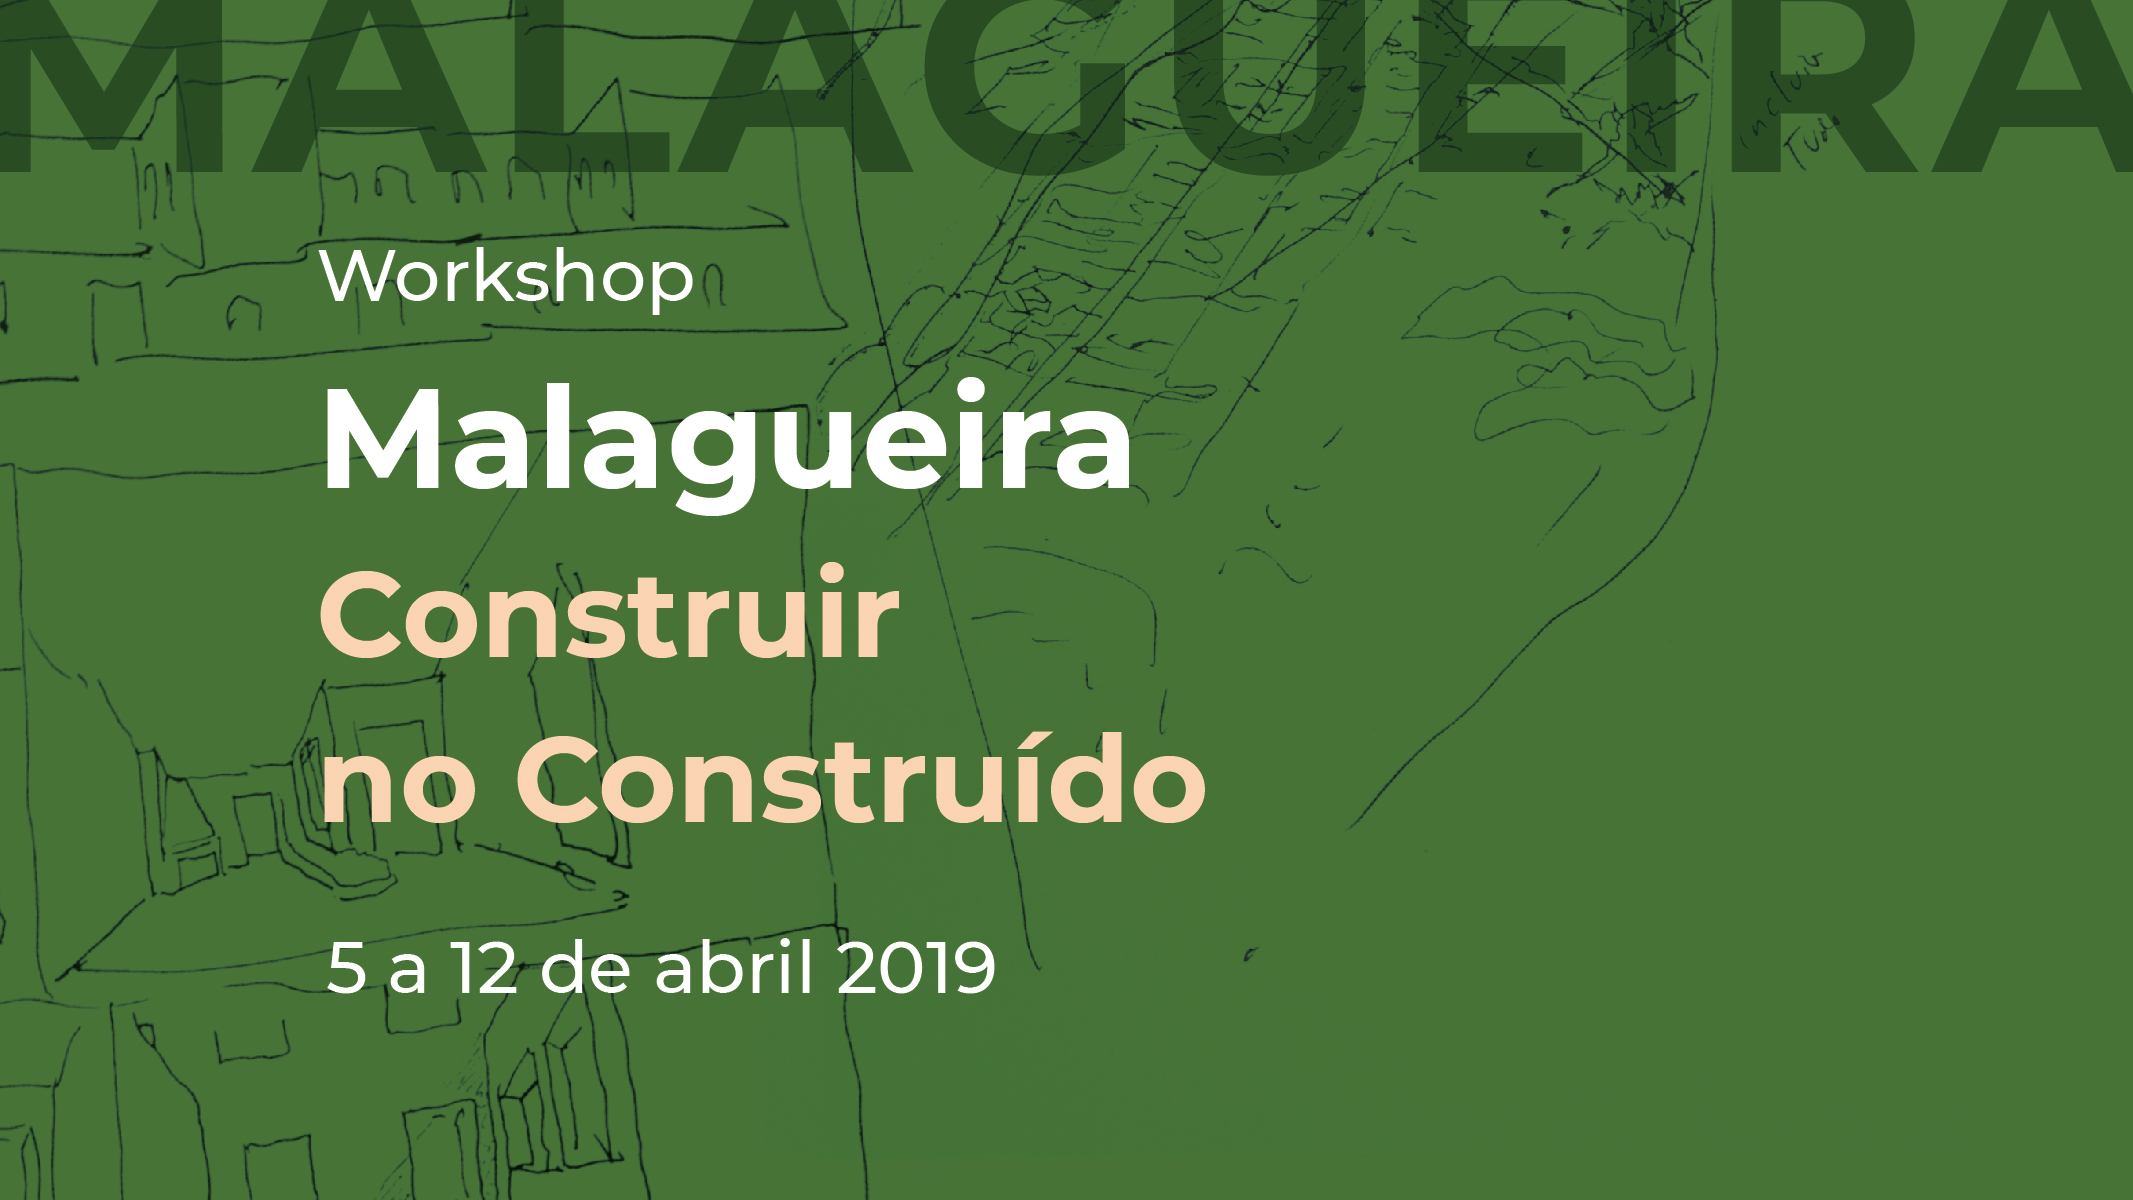 Workshop Malagueira: Construir no Construído | Inscrições abertas